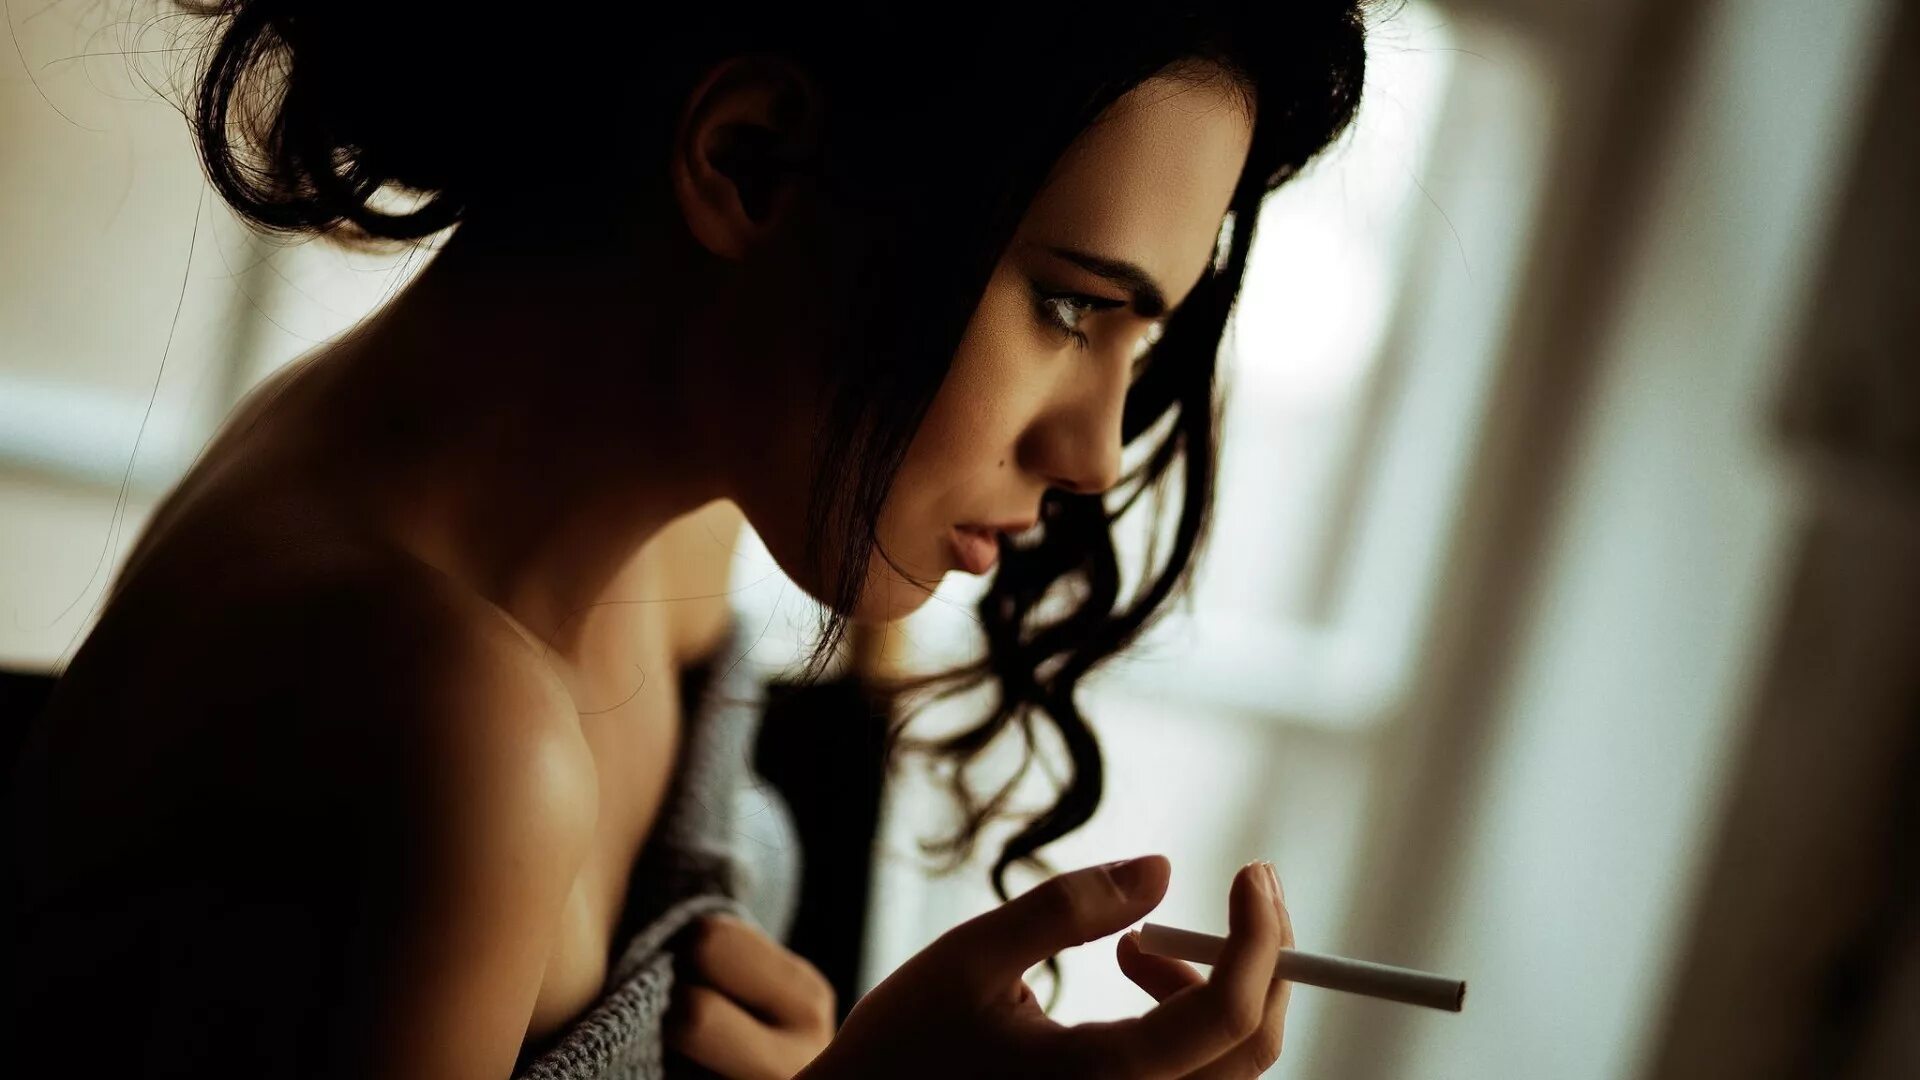 Запах ее темных волос nasty babe white. Девушка с сигаретой. Красивая девушка с сигаретой. Красивая женщина курит. Курящая девушка.